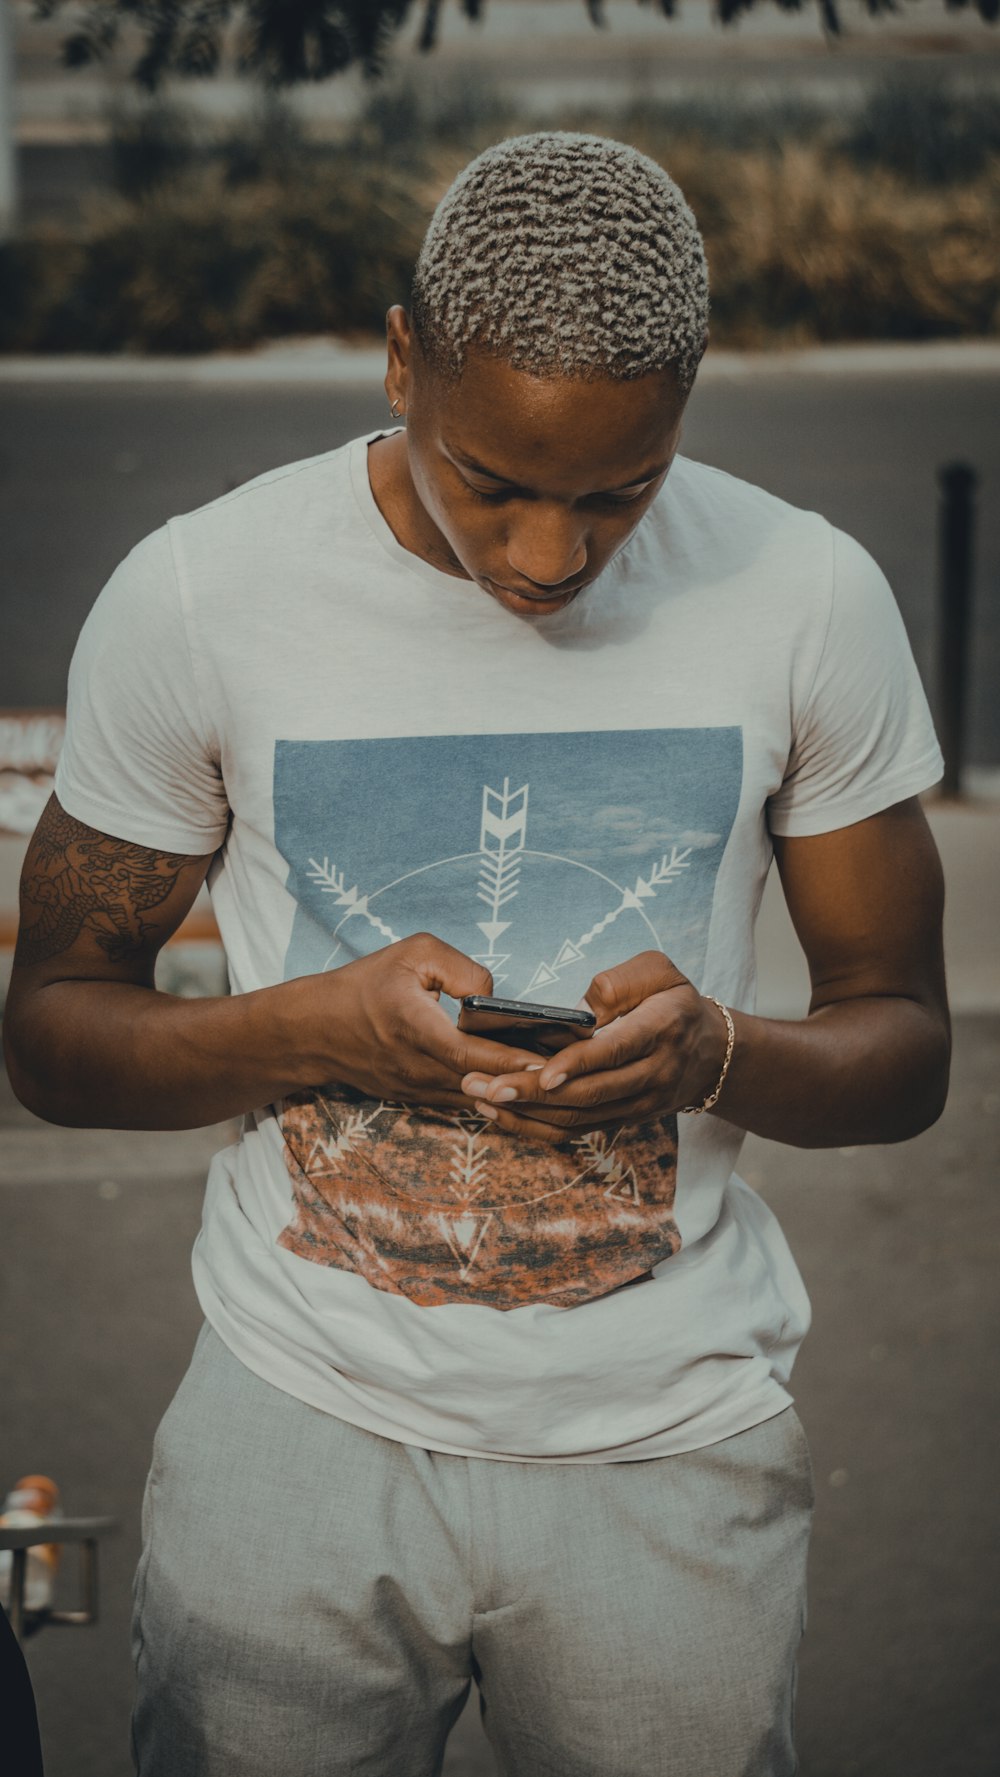 man in white crew neck t-shirt holding black smartphone